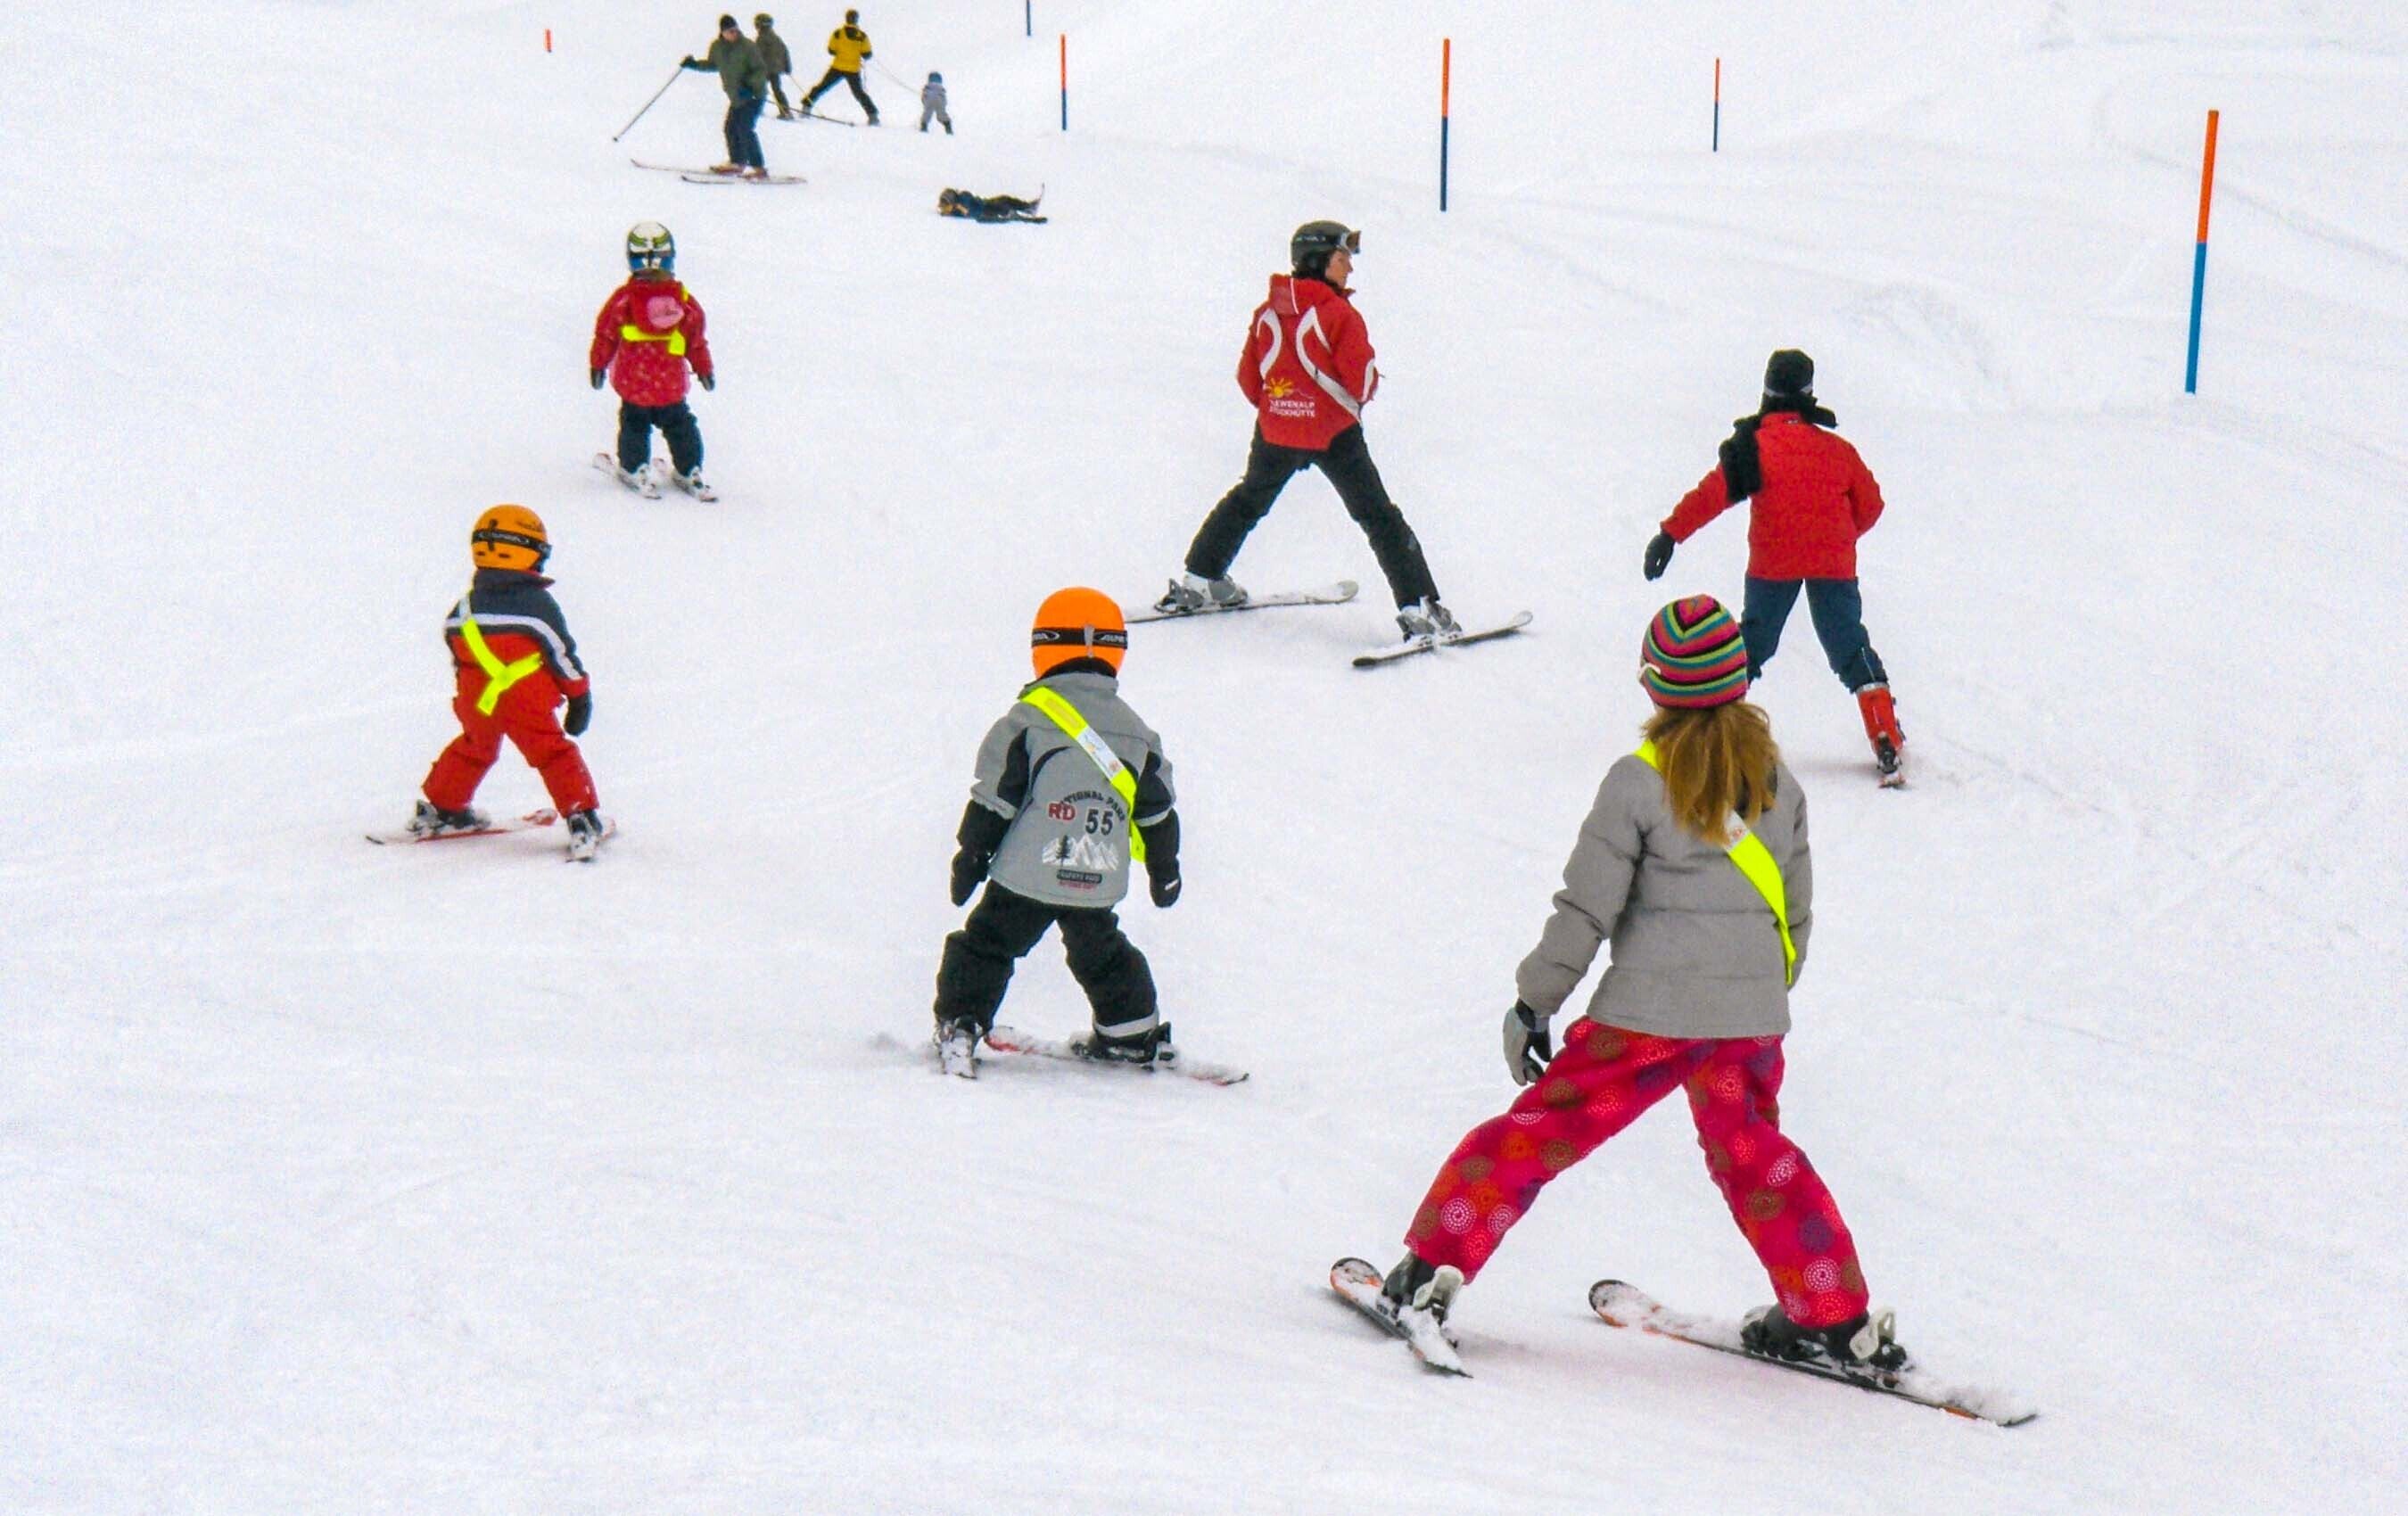 Unterricht skischule snowboardschule klewenalp stockhuette 03